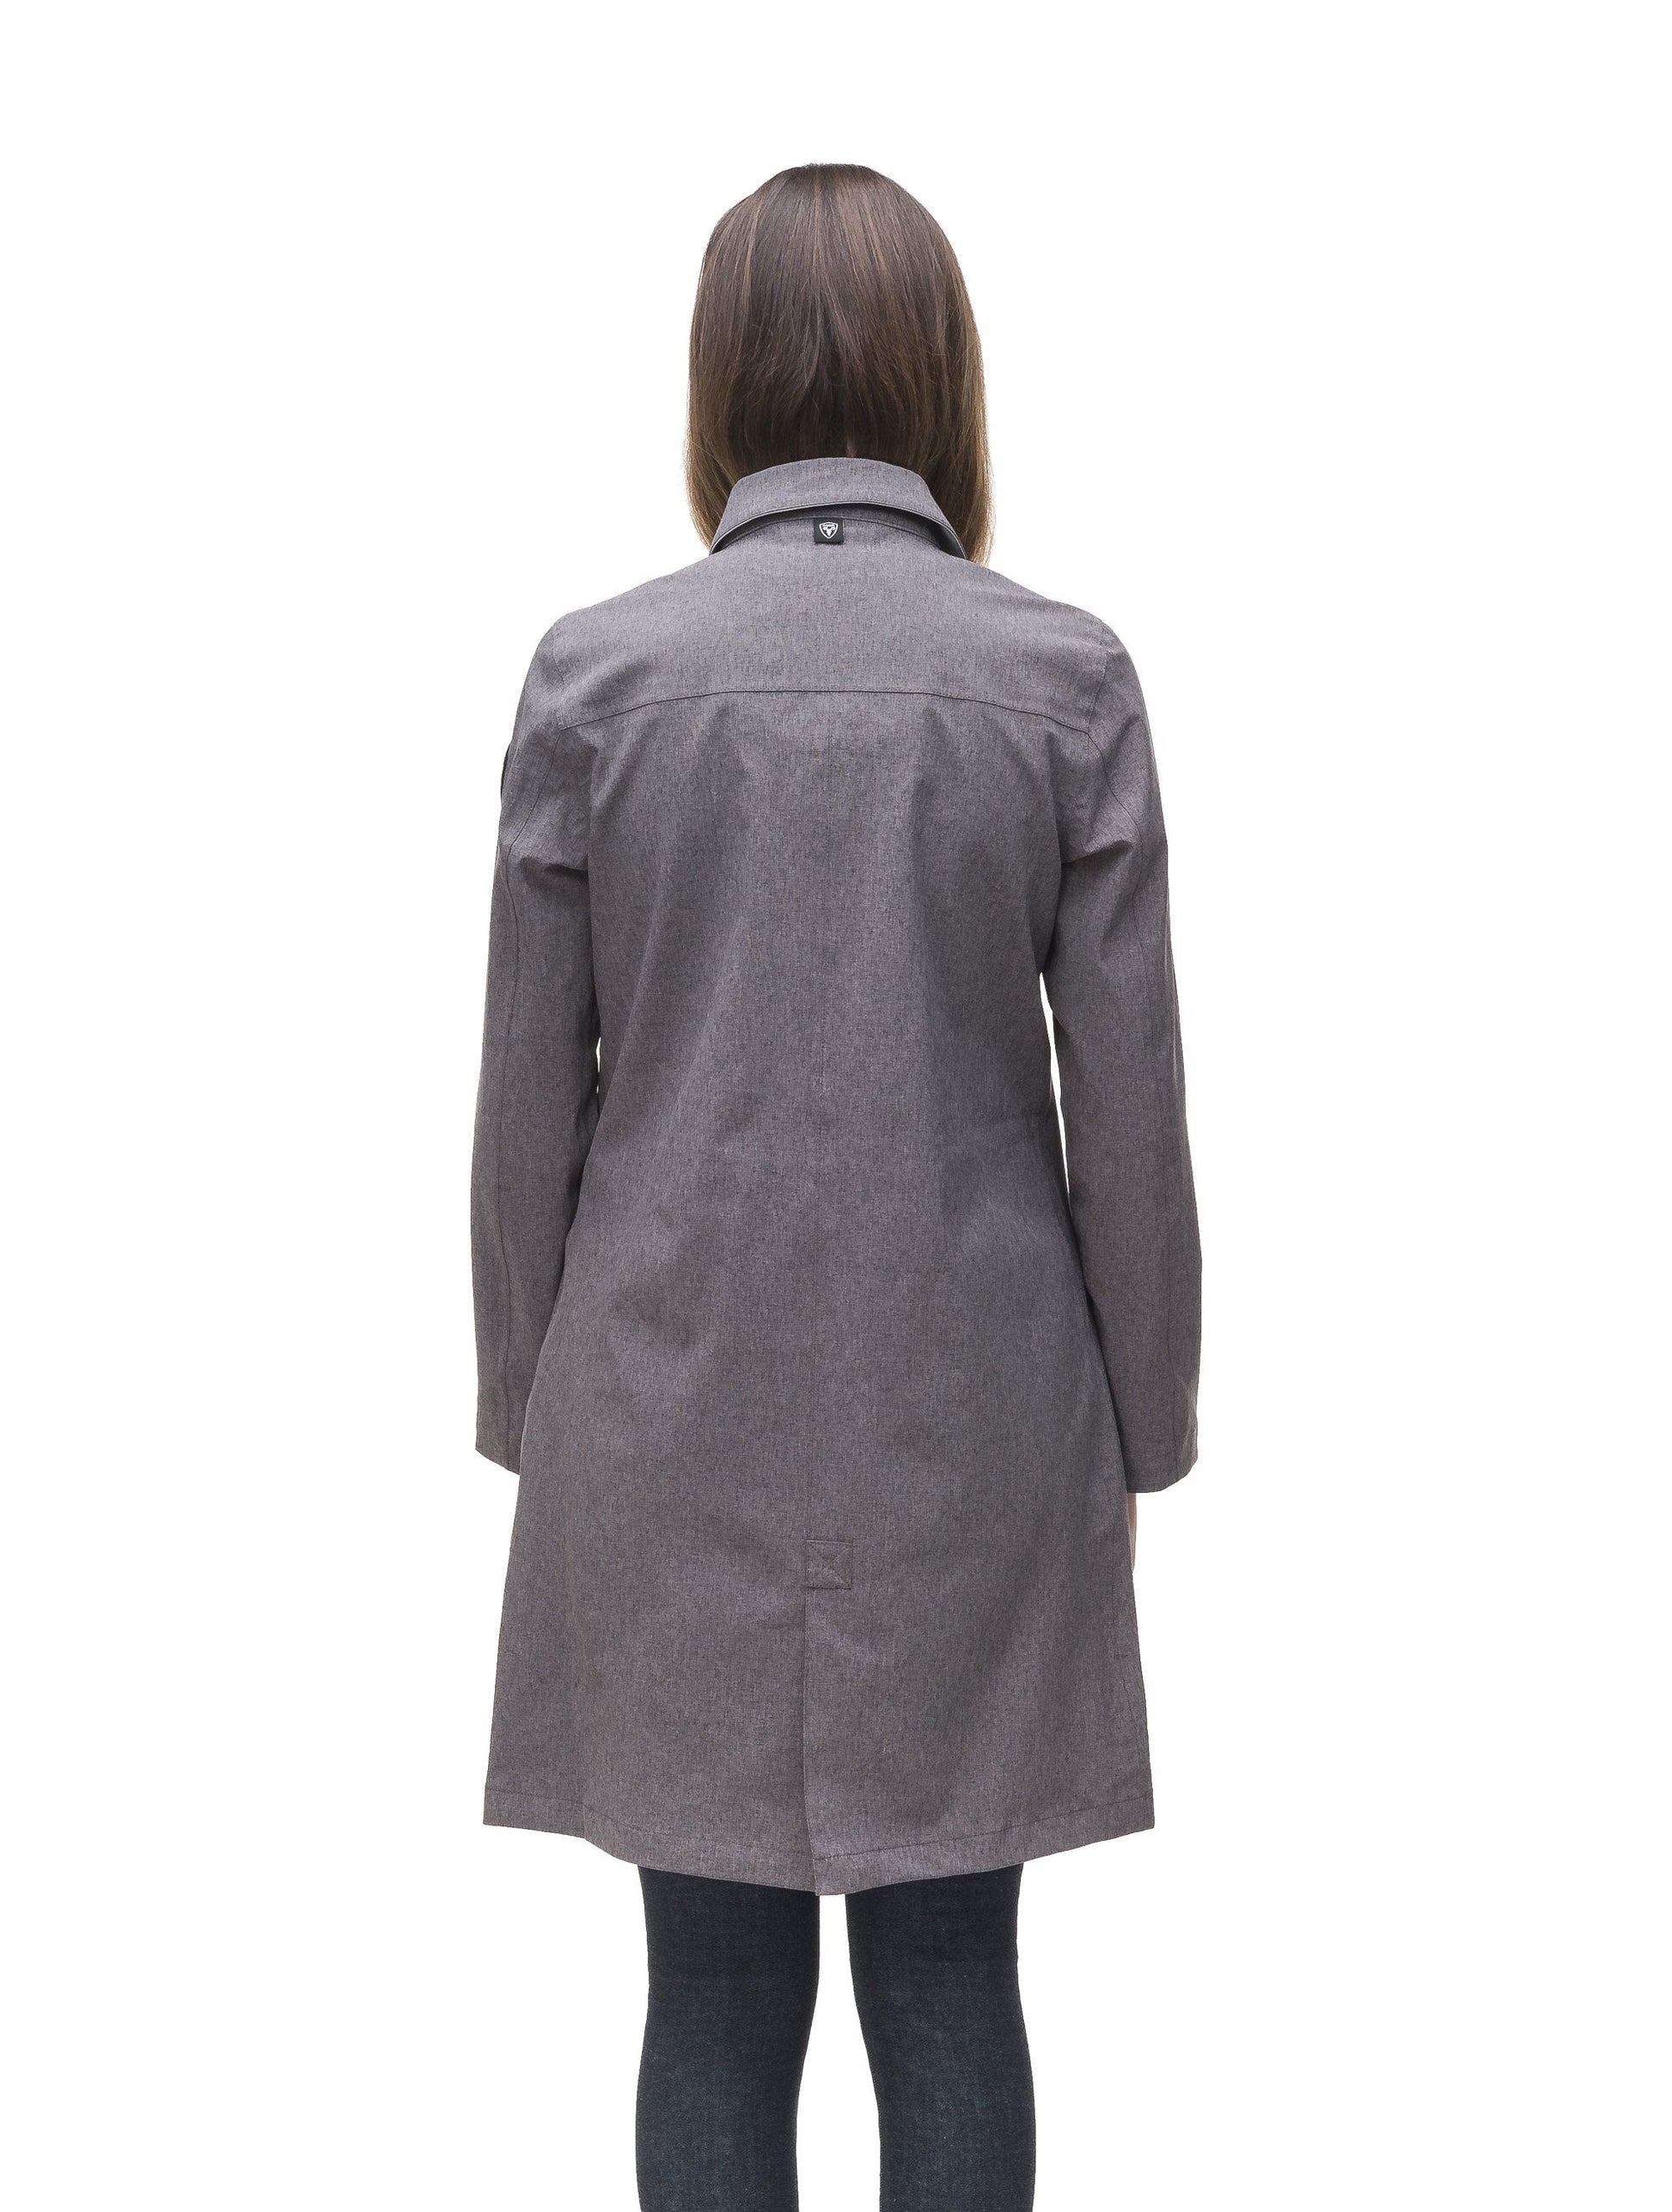 Women's thigh length collared rain jacket in Dk Grey